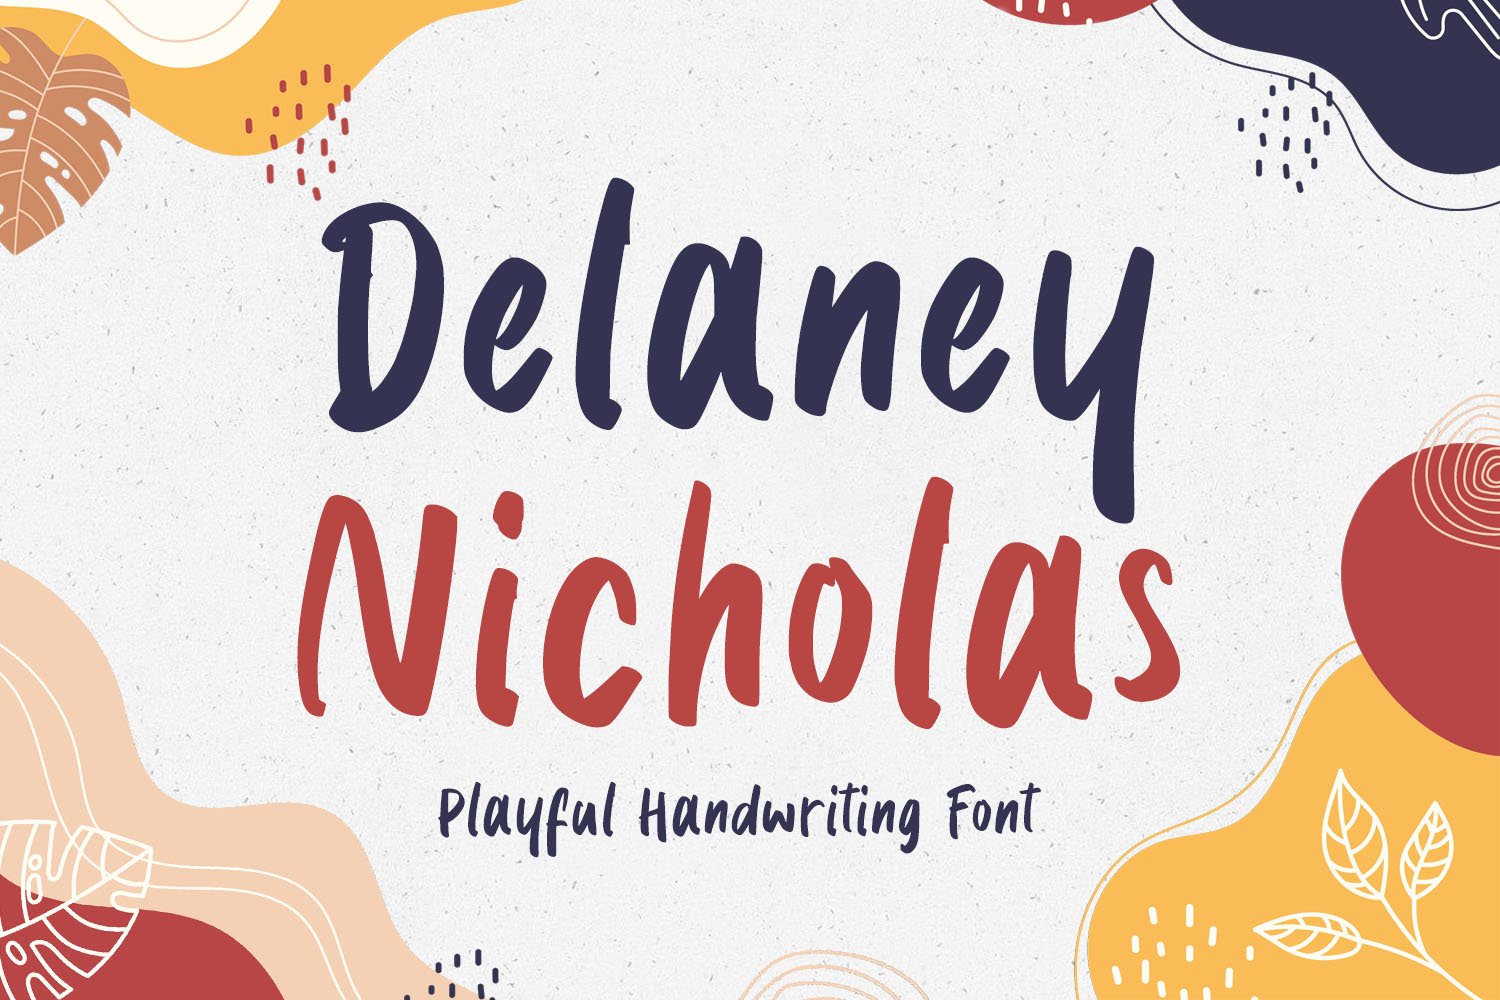 Delaney Nicholas - Cute Handwritten cover image.